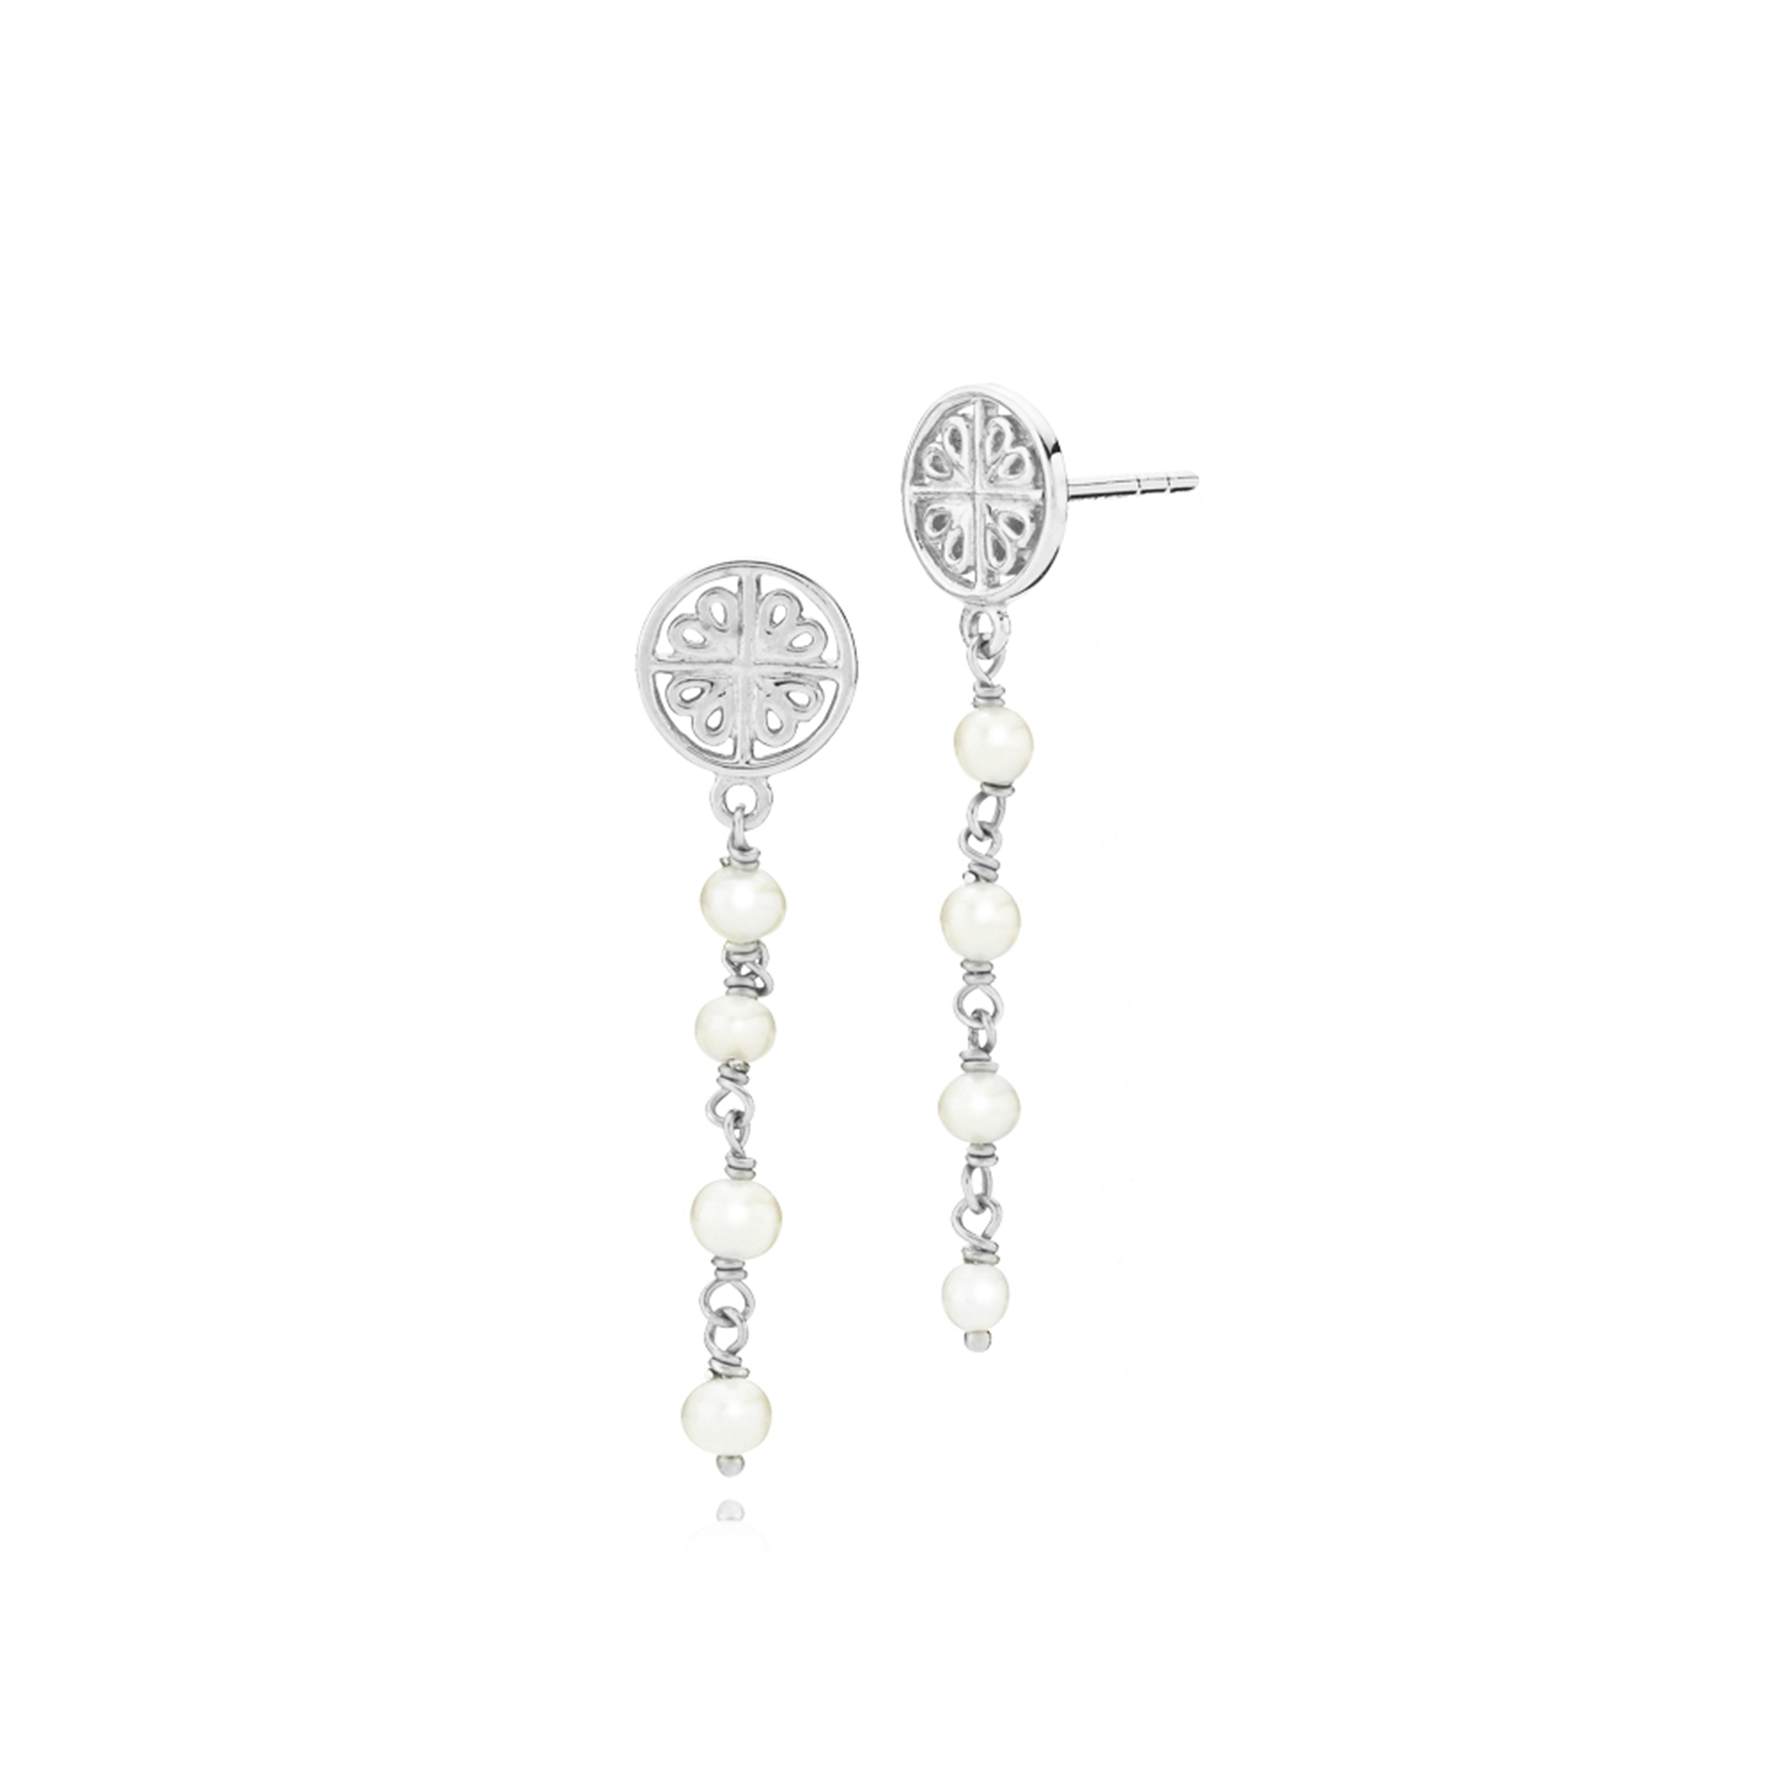 Balance Earrings With Pearl fra Sistie i Sølv Sterling 925|Freshwater Pearl|Blank